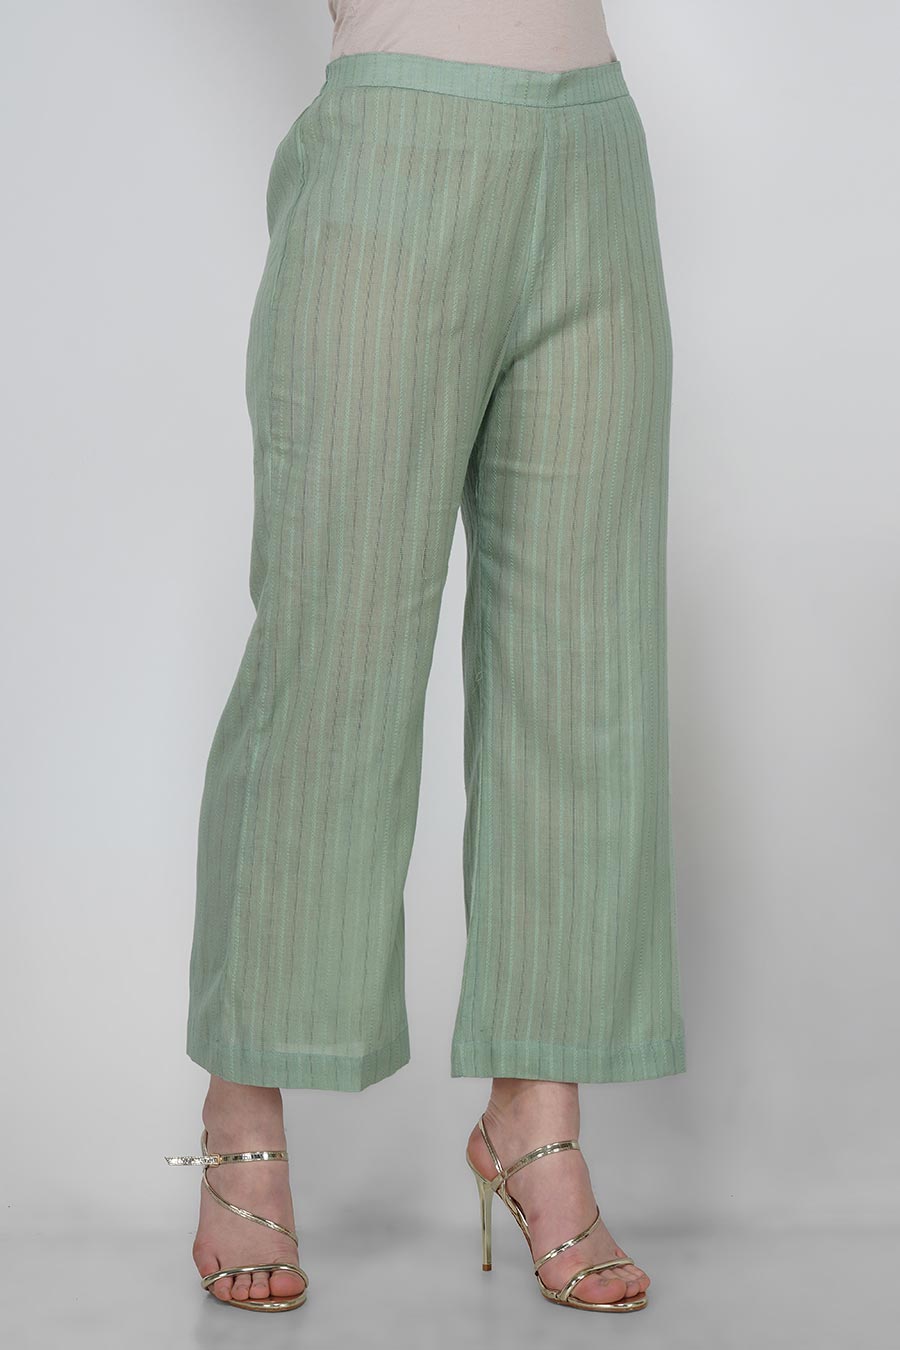 Rosemary Leno Cotton Striped Pants